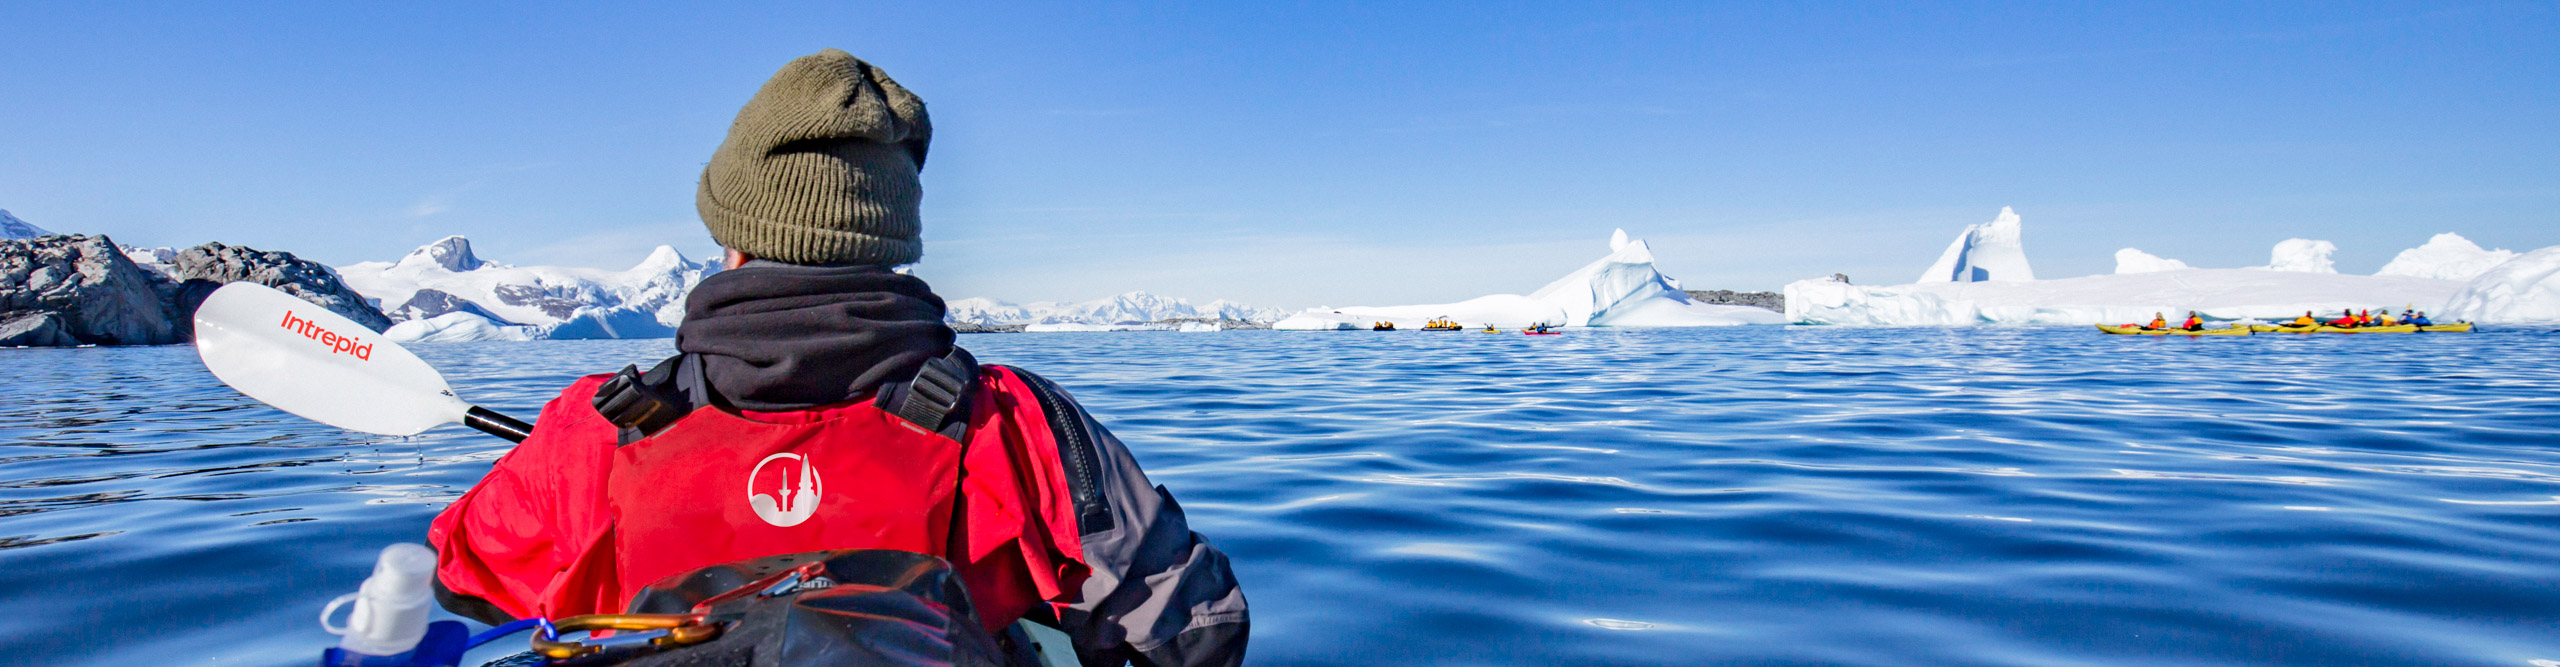 Person I waiting Intrepid jacket kayaking in the bright sun near icebergs, Antarctica 